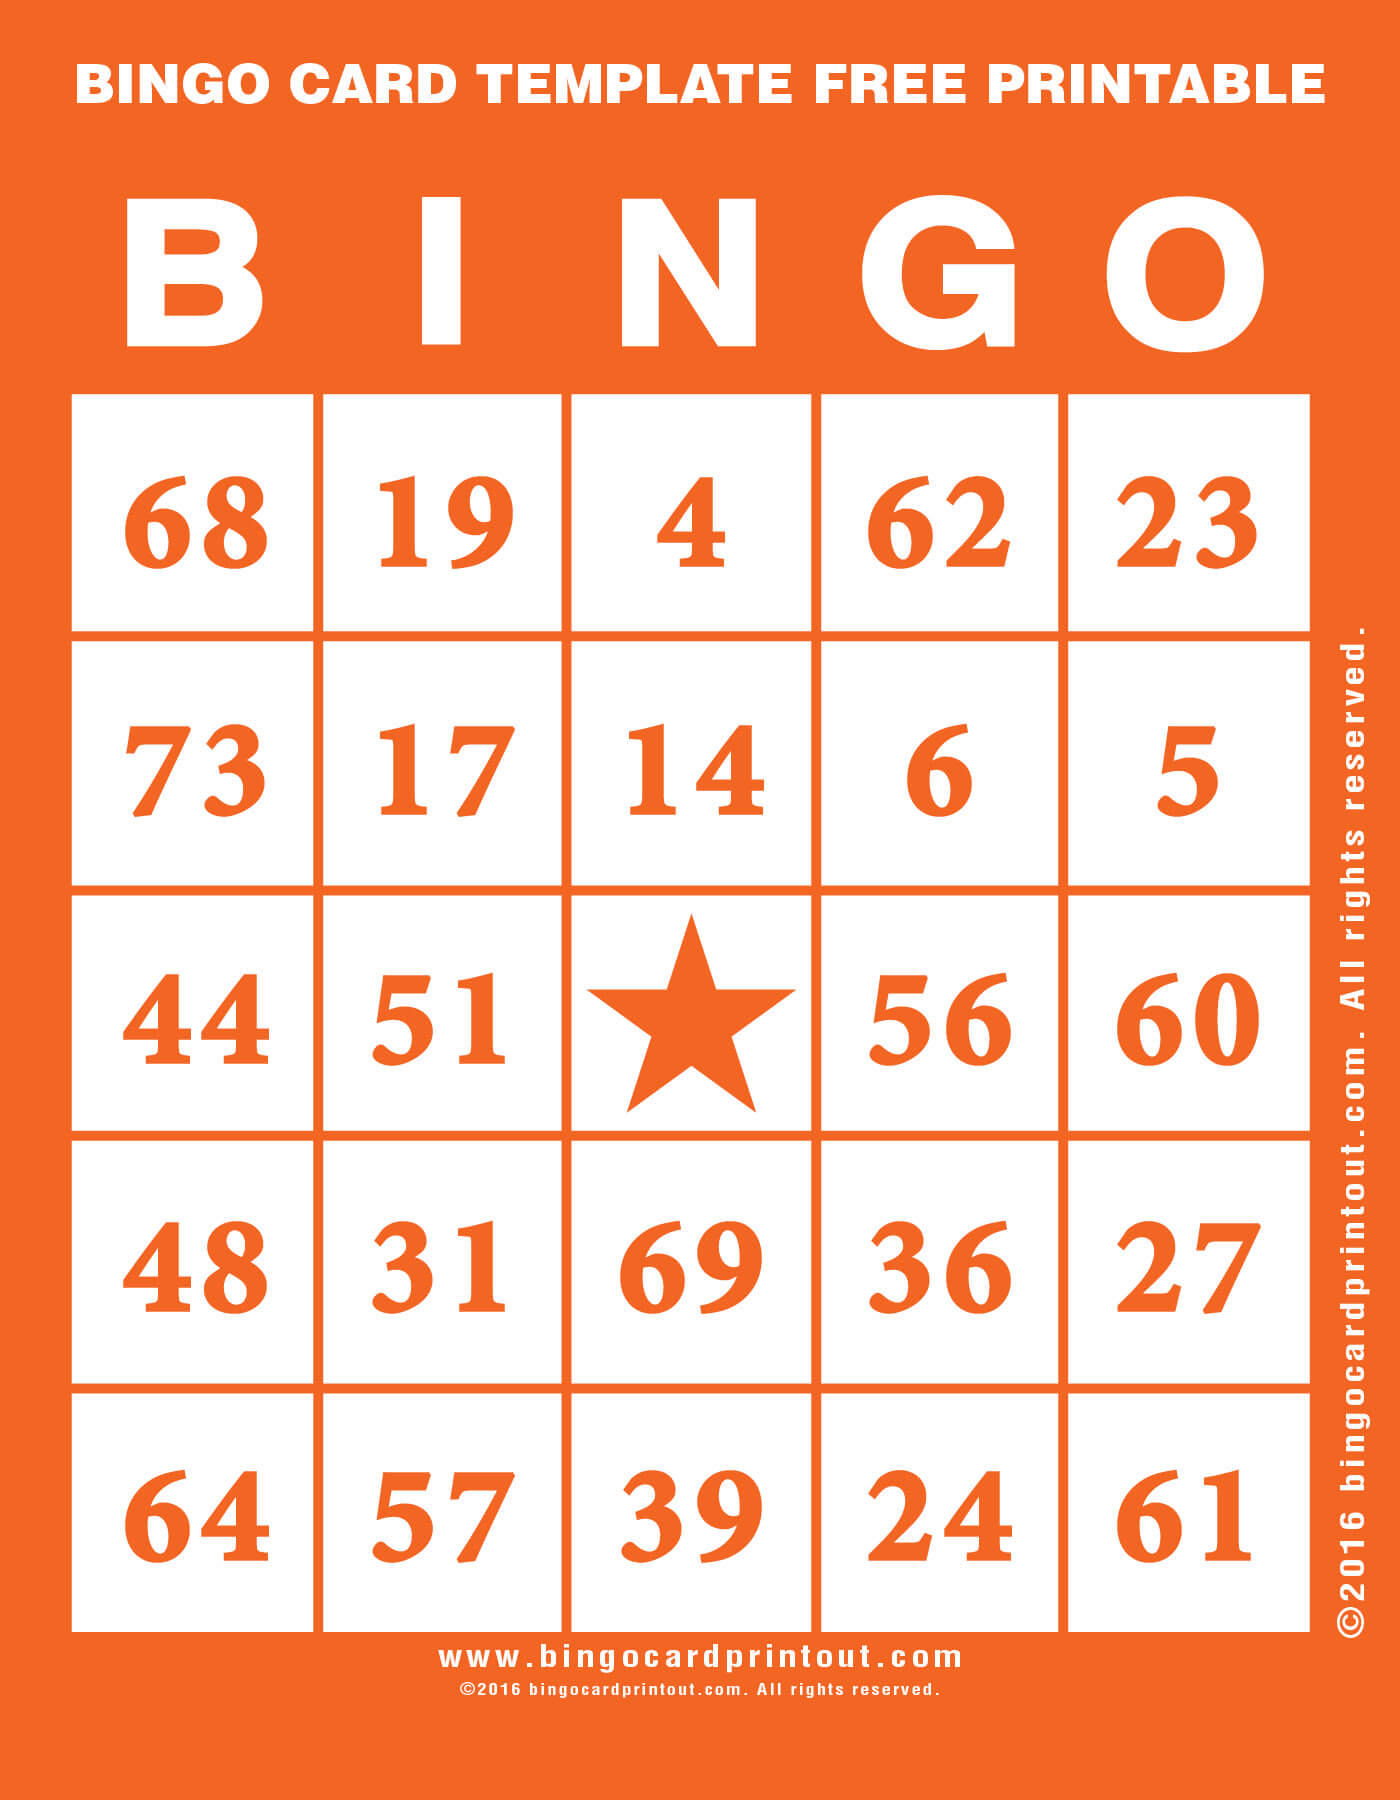 Bingo Card Templates Free. Blank Bingo Cards Template Word Throughout Blank Bingo Card Template Microsoft Word